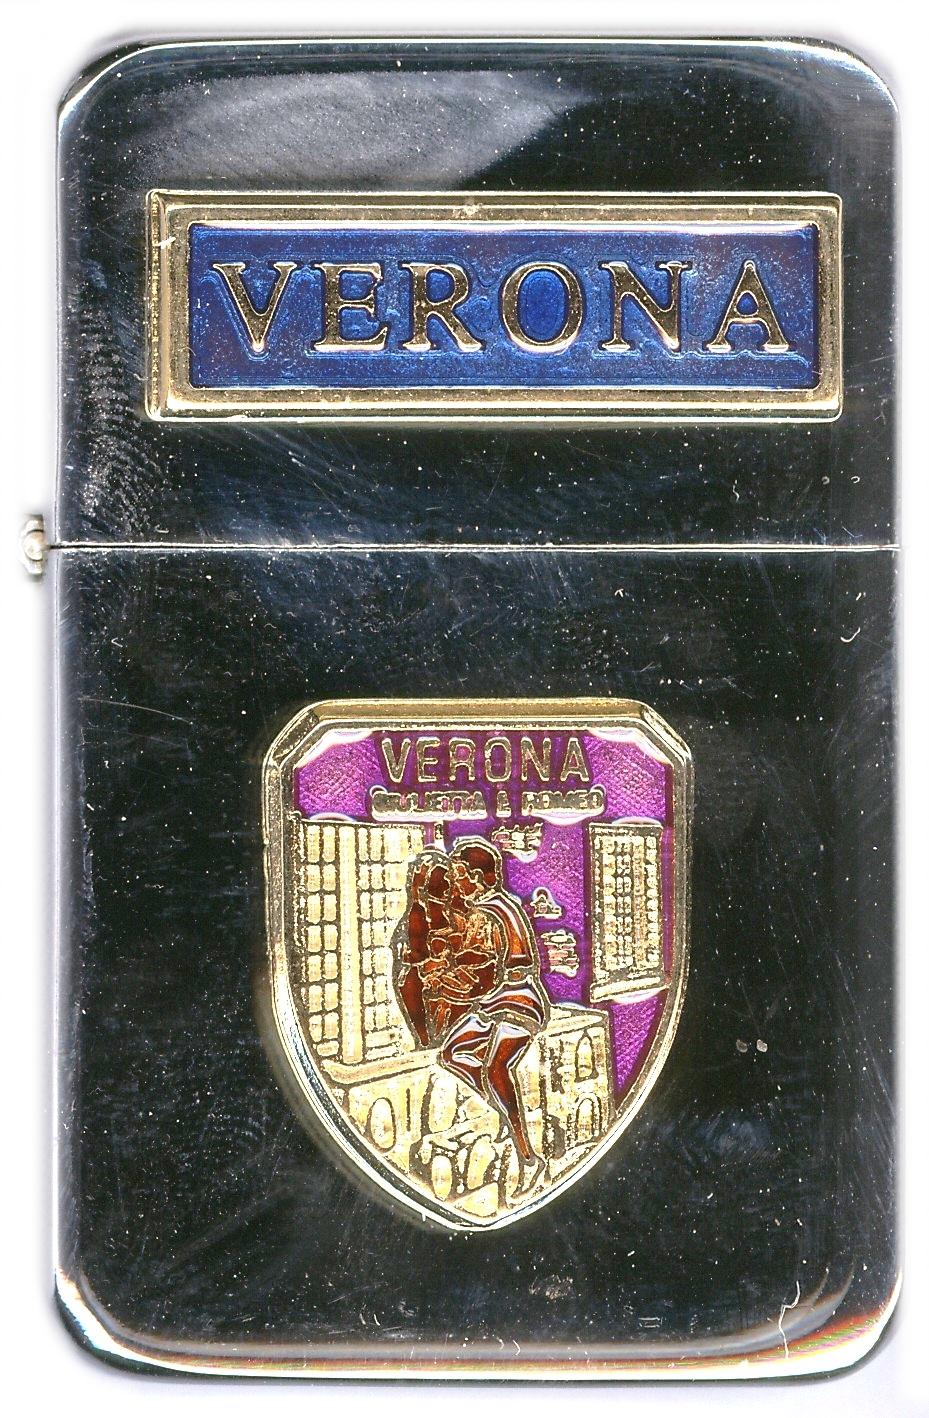 99-05-04-3604 Accendino Verona Benzina Spilla Giulietta Viola CONF.da n.12 Pz.